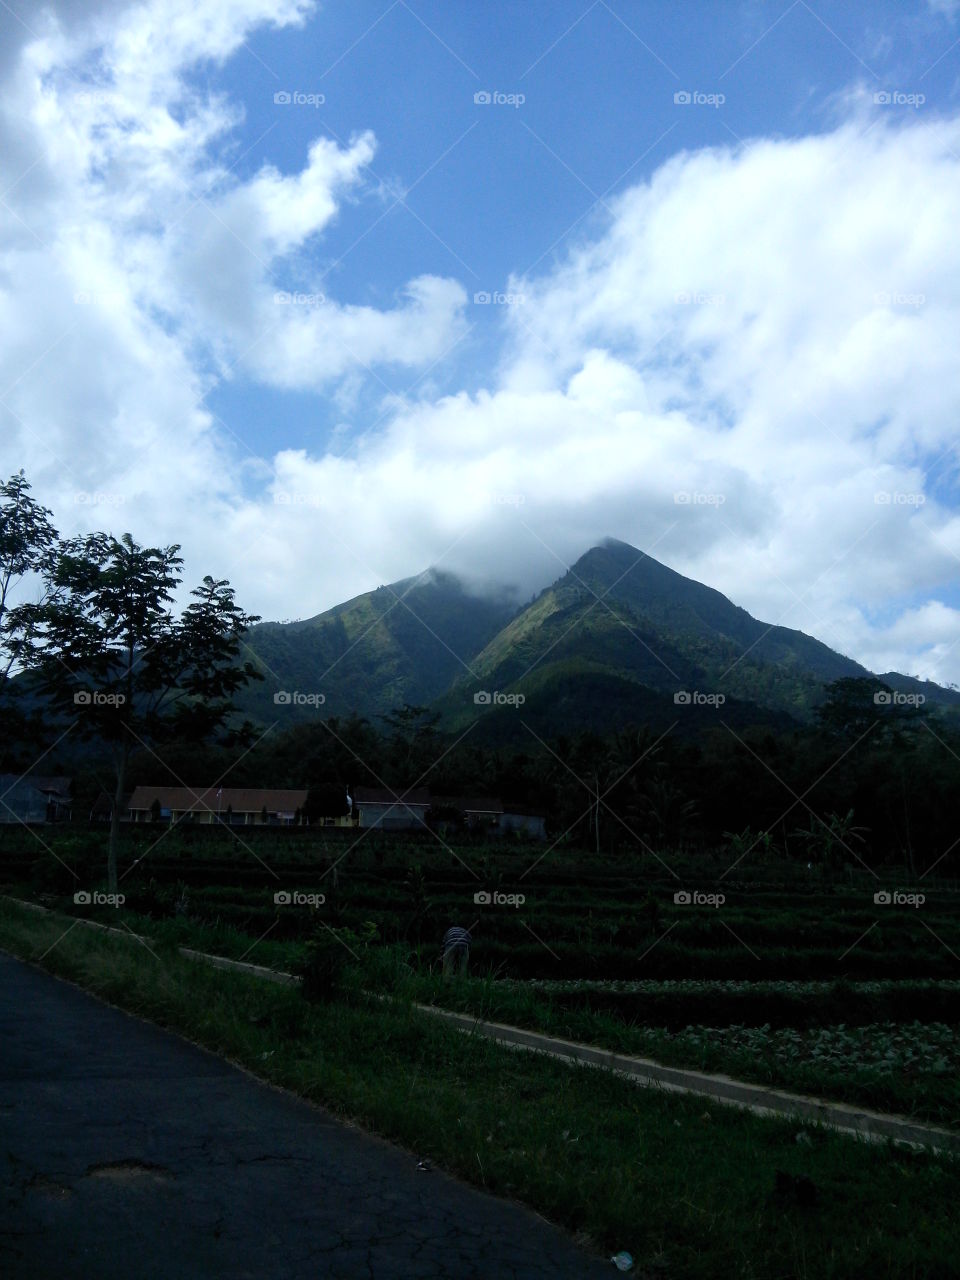 Gunung Merbabu is in the morning